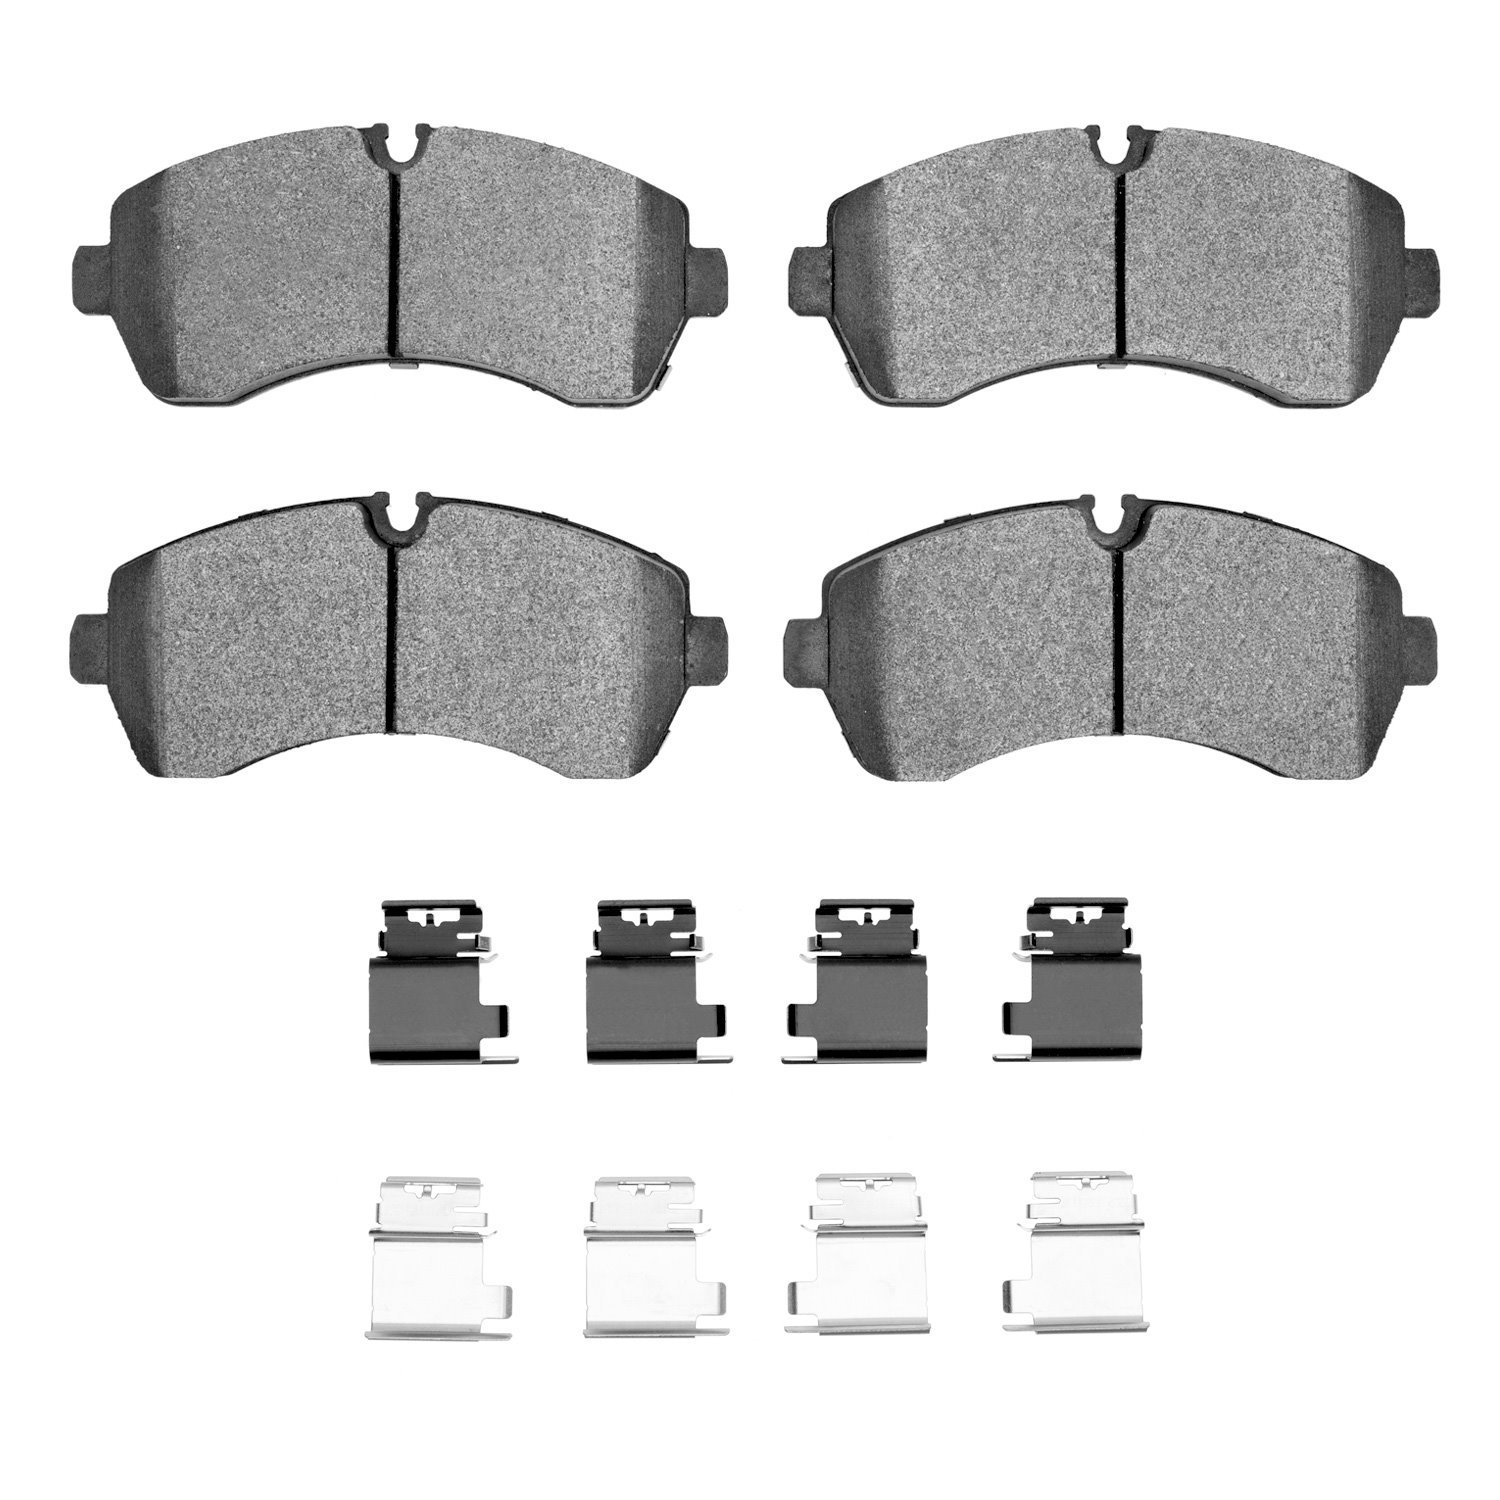 1551-1268-02 5000 Advanced Semi-Metallic Brake Pads & Hardware Kit, Fits Select Multiple Makes/Models, Position: Fr,Front